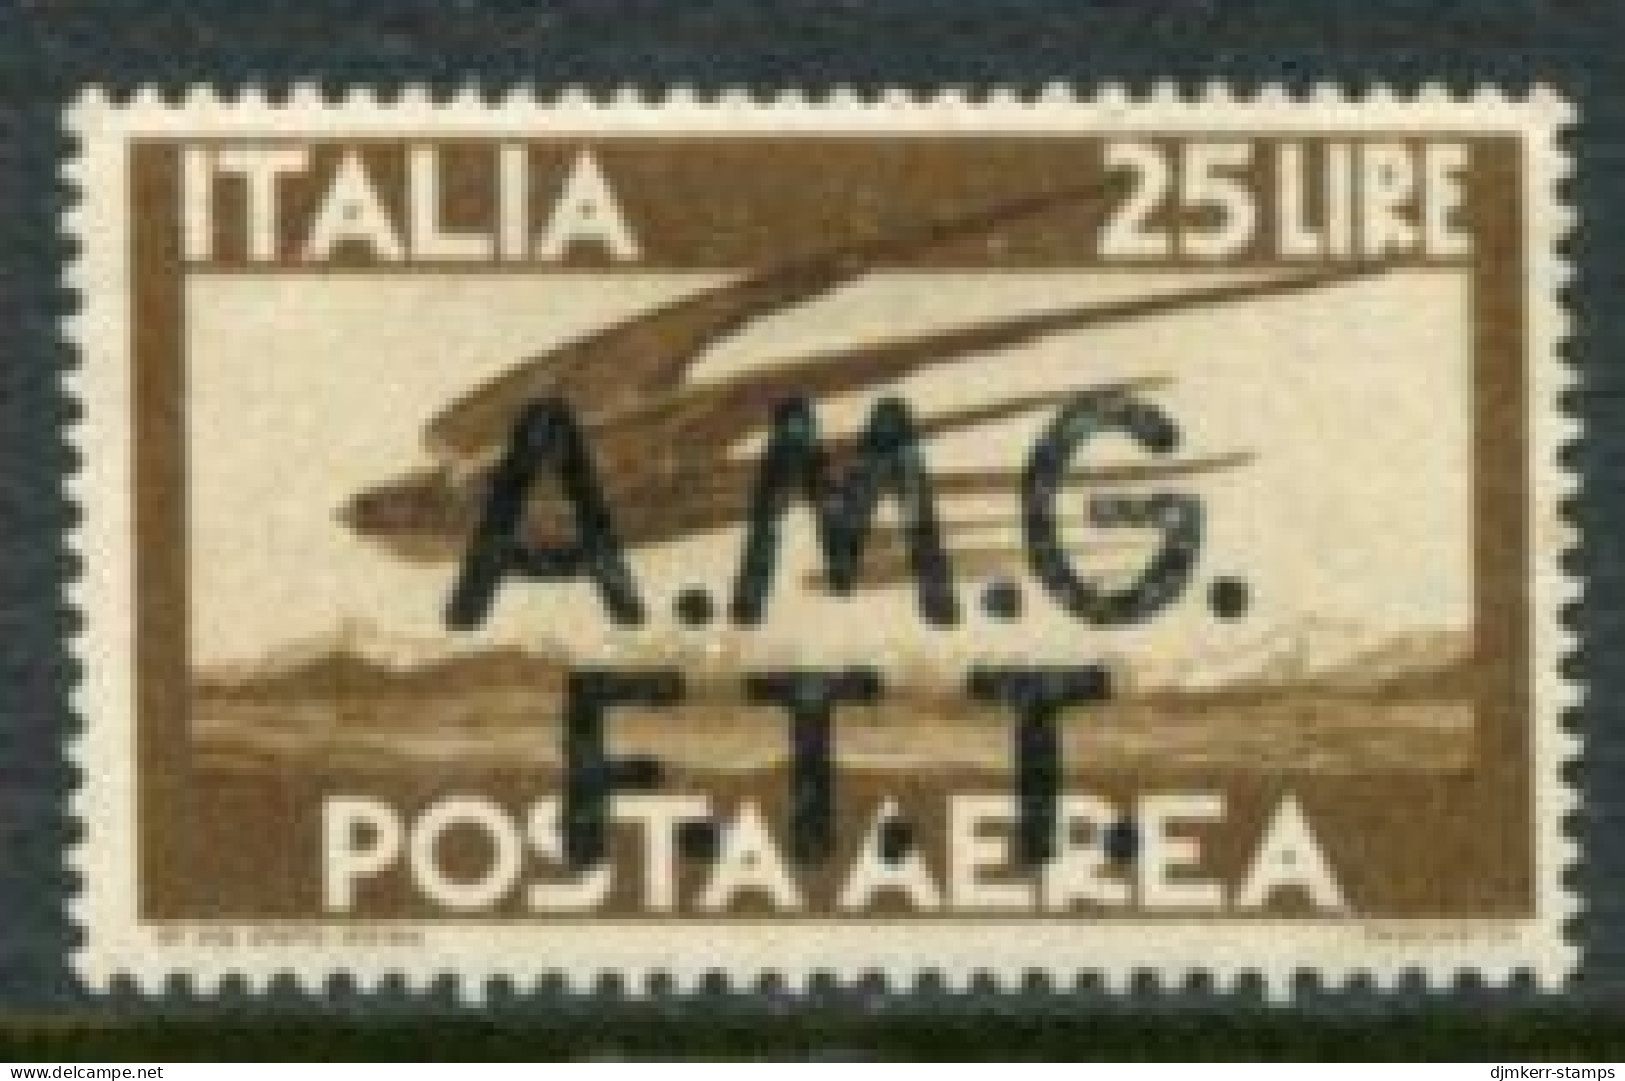 TRIESTE ZONE A 1947 Airmail 25 L. MNH / **  Michel 22 - Nuevos